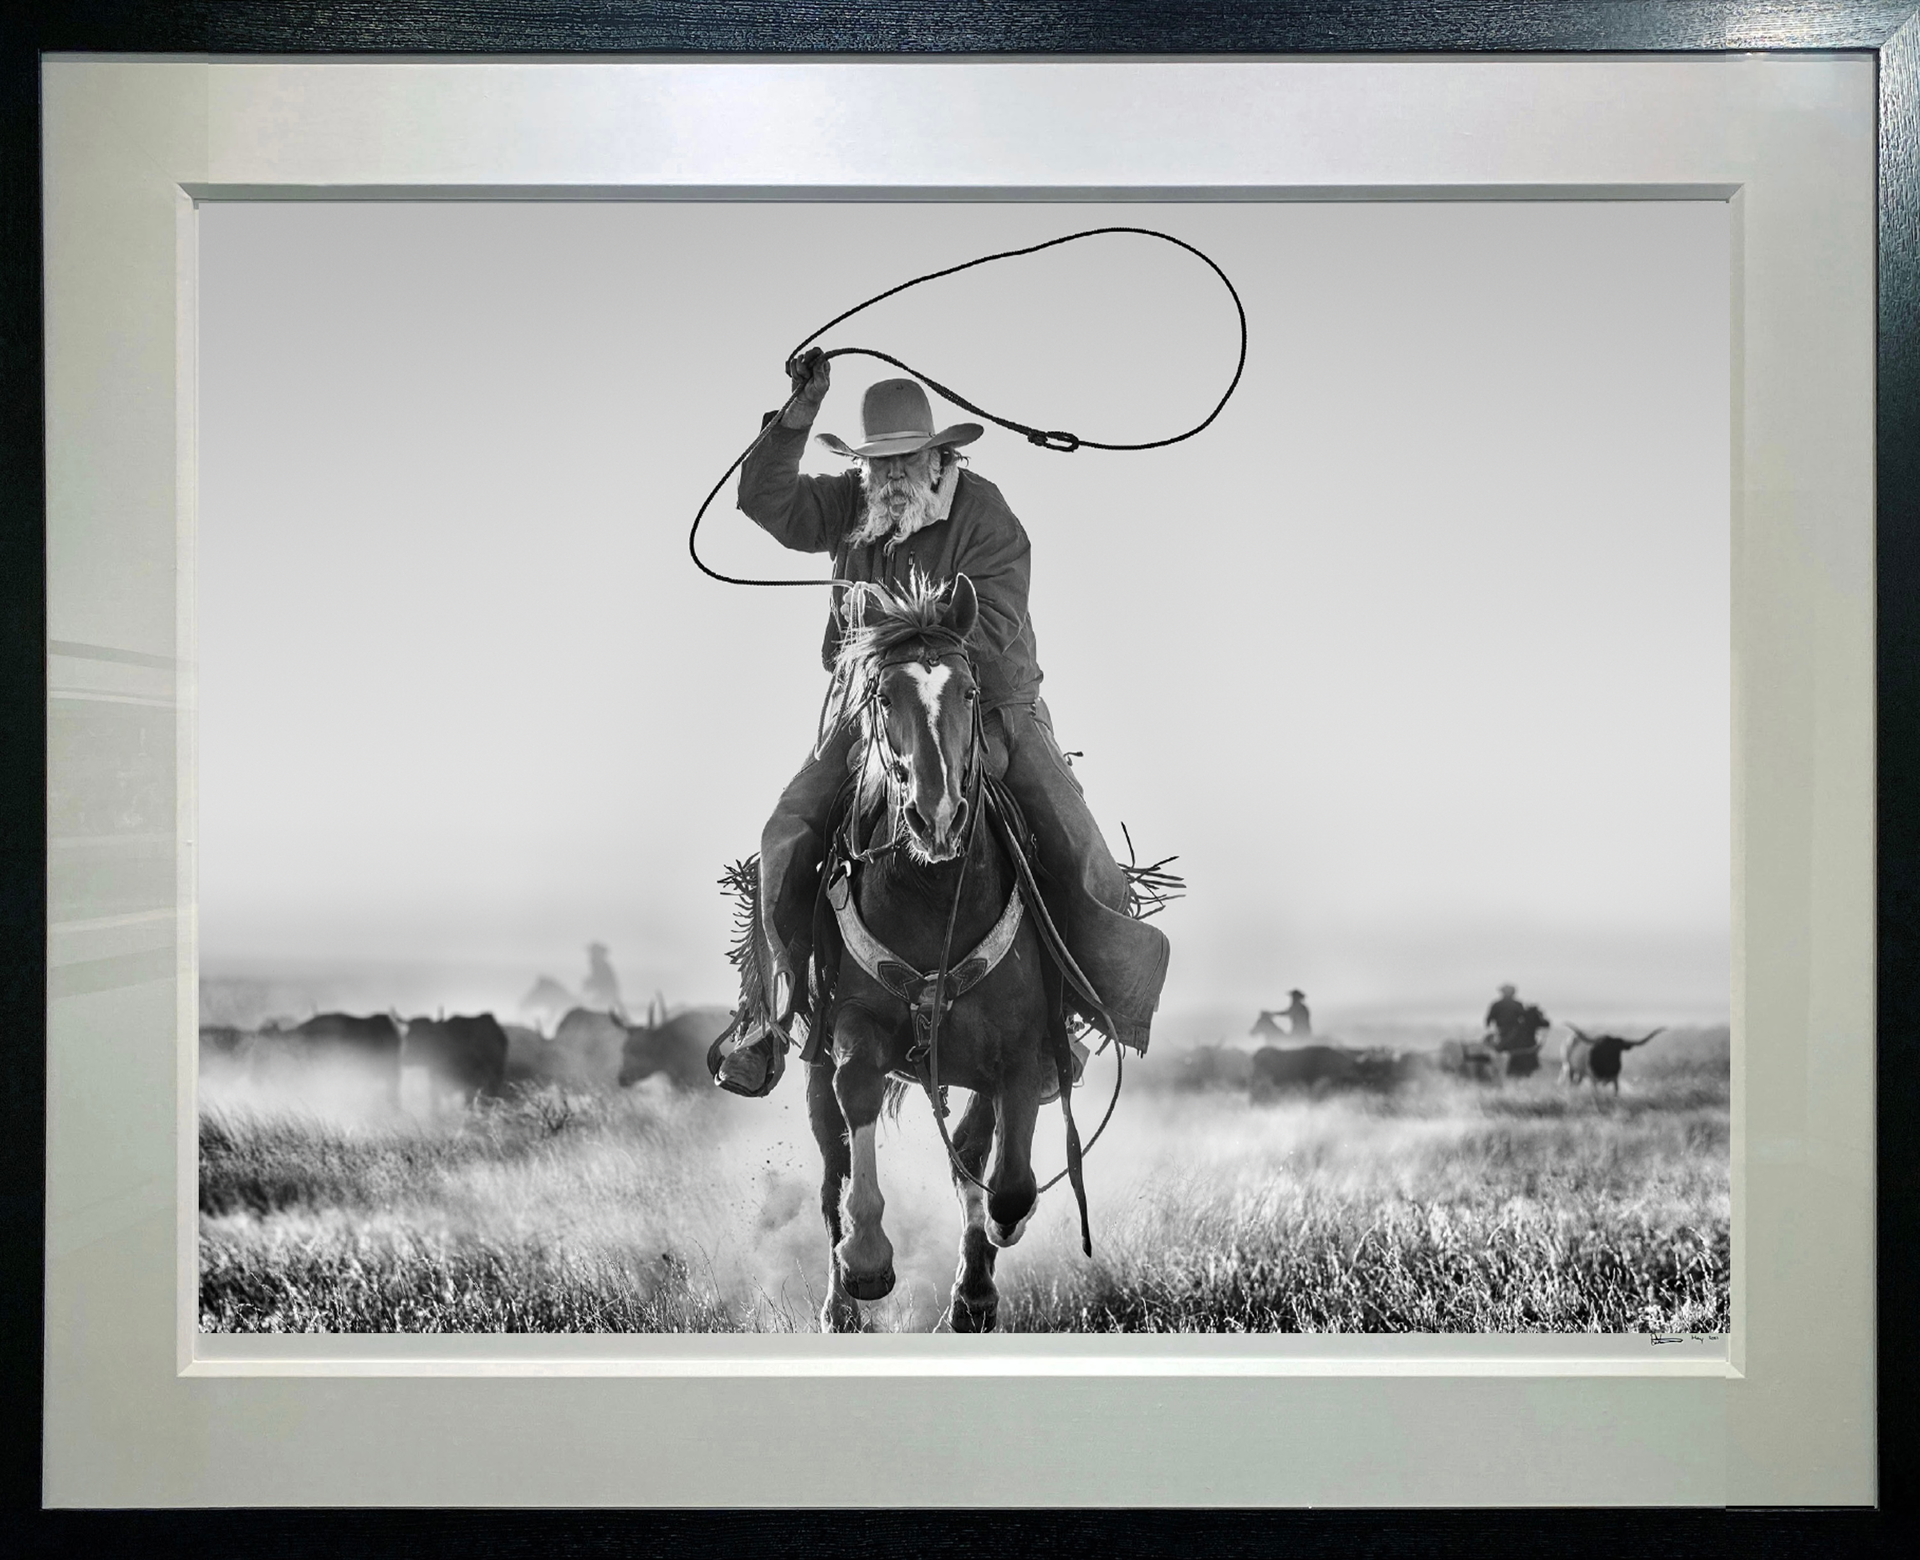 The Rancher by David Yarrow